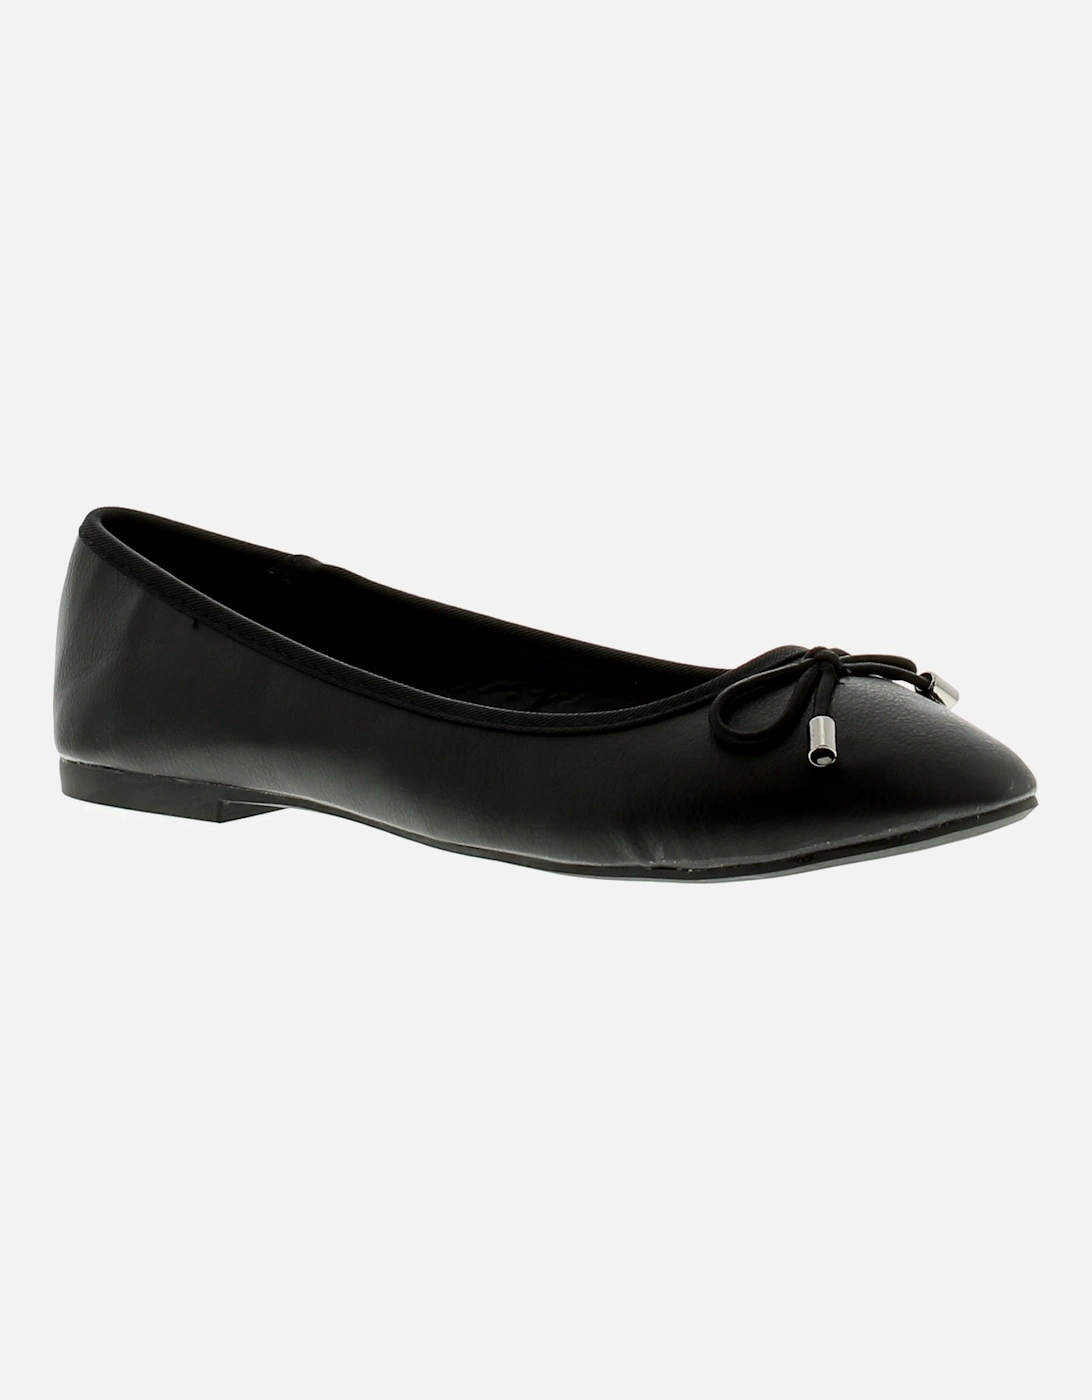 Womens Flat Shoes Brittany Slip On black UK Size, 6 of 5